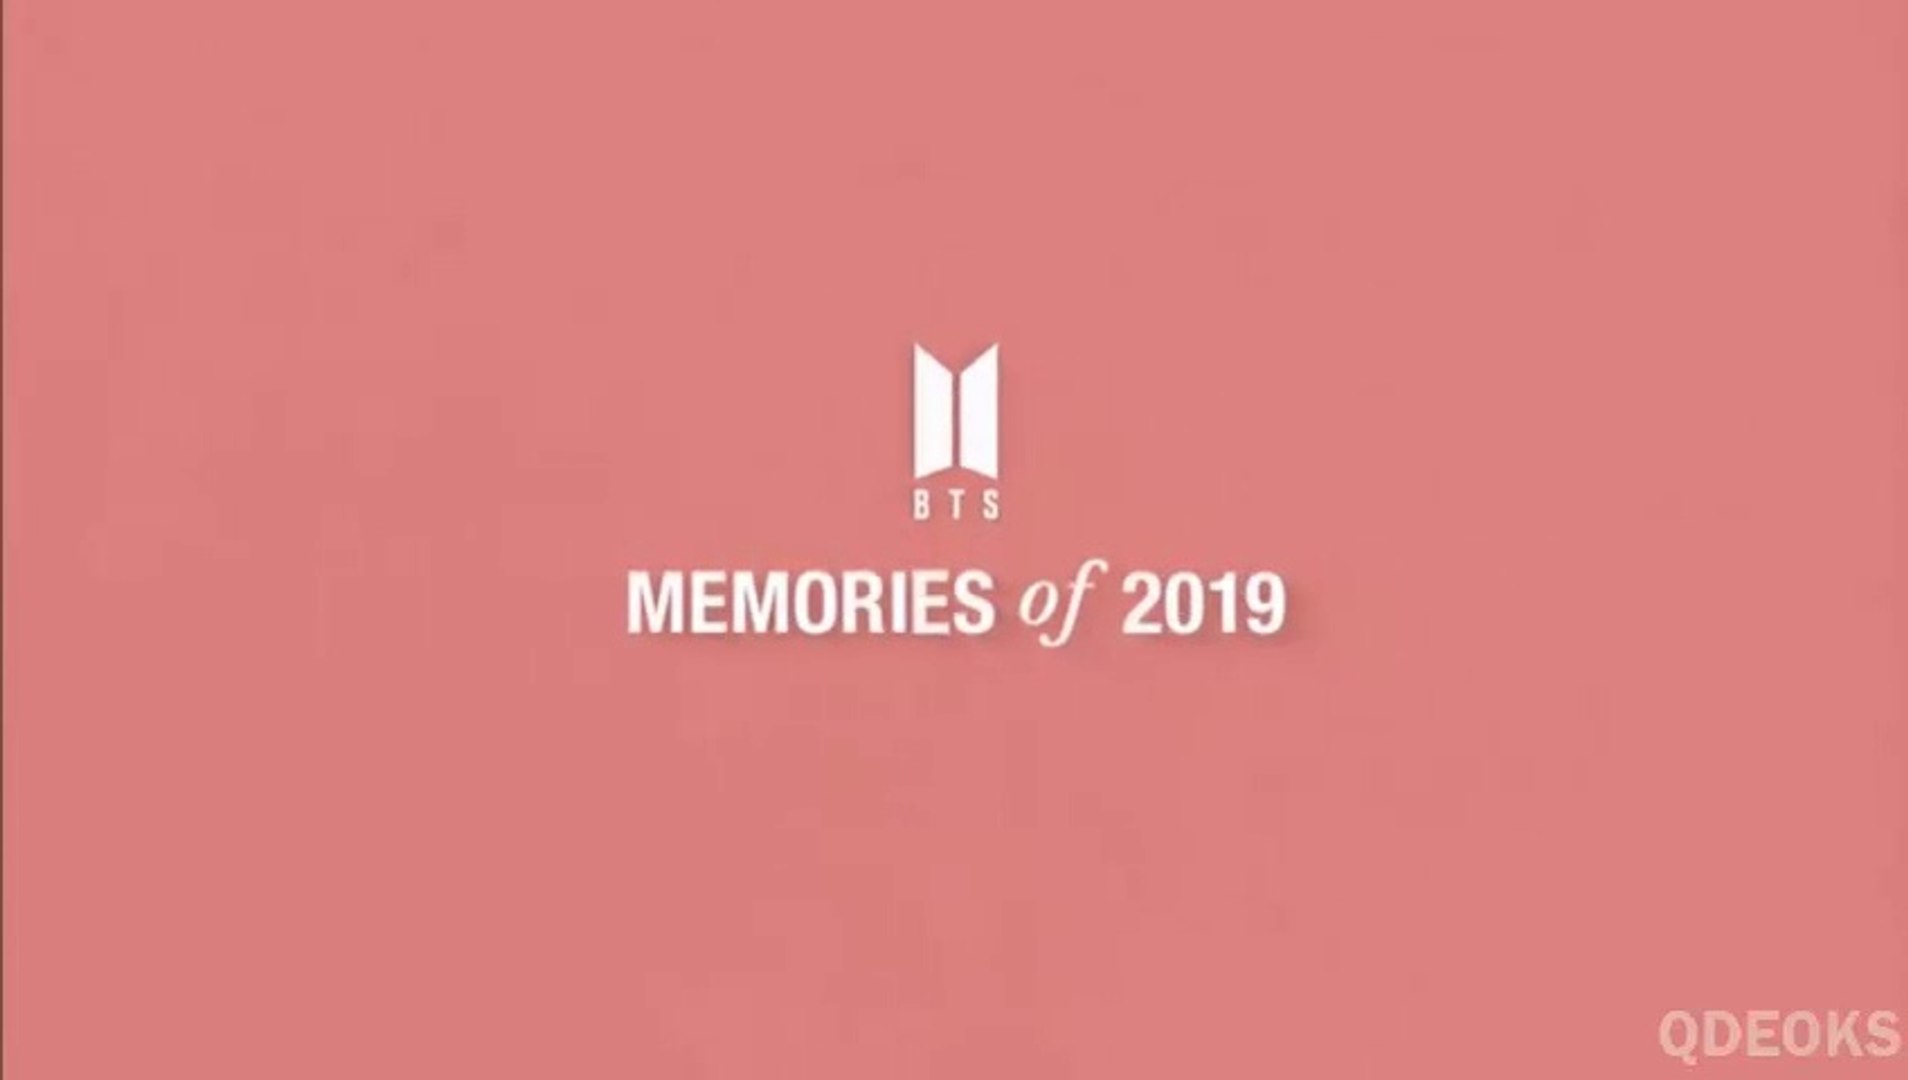 ENGSUB] BTS MEMORIES OF 2019 DVD by Jung Hyun Ran - Dailymotion